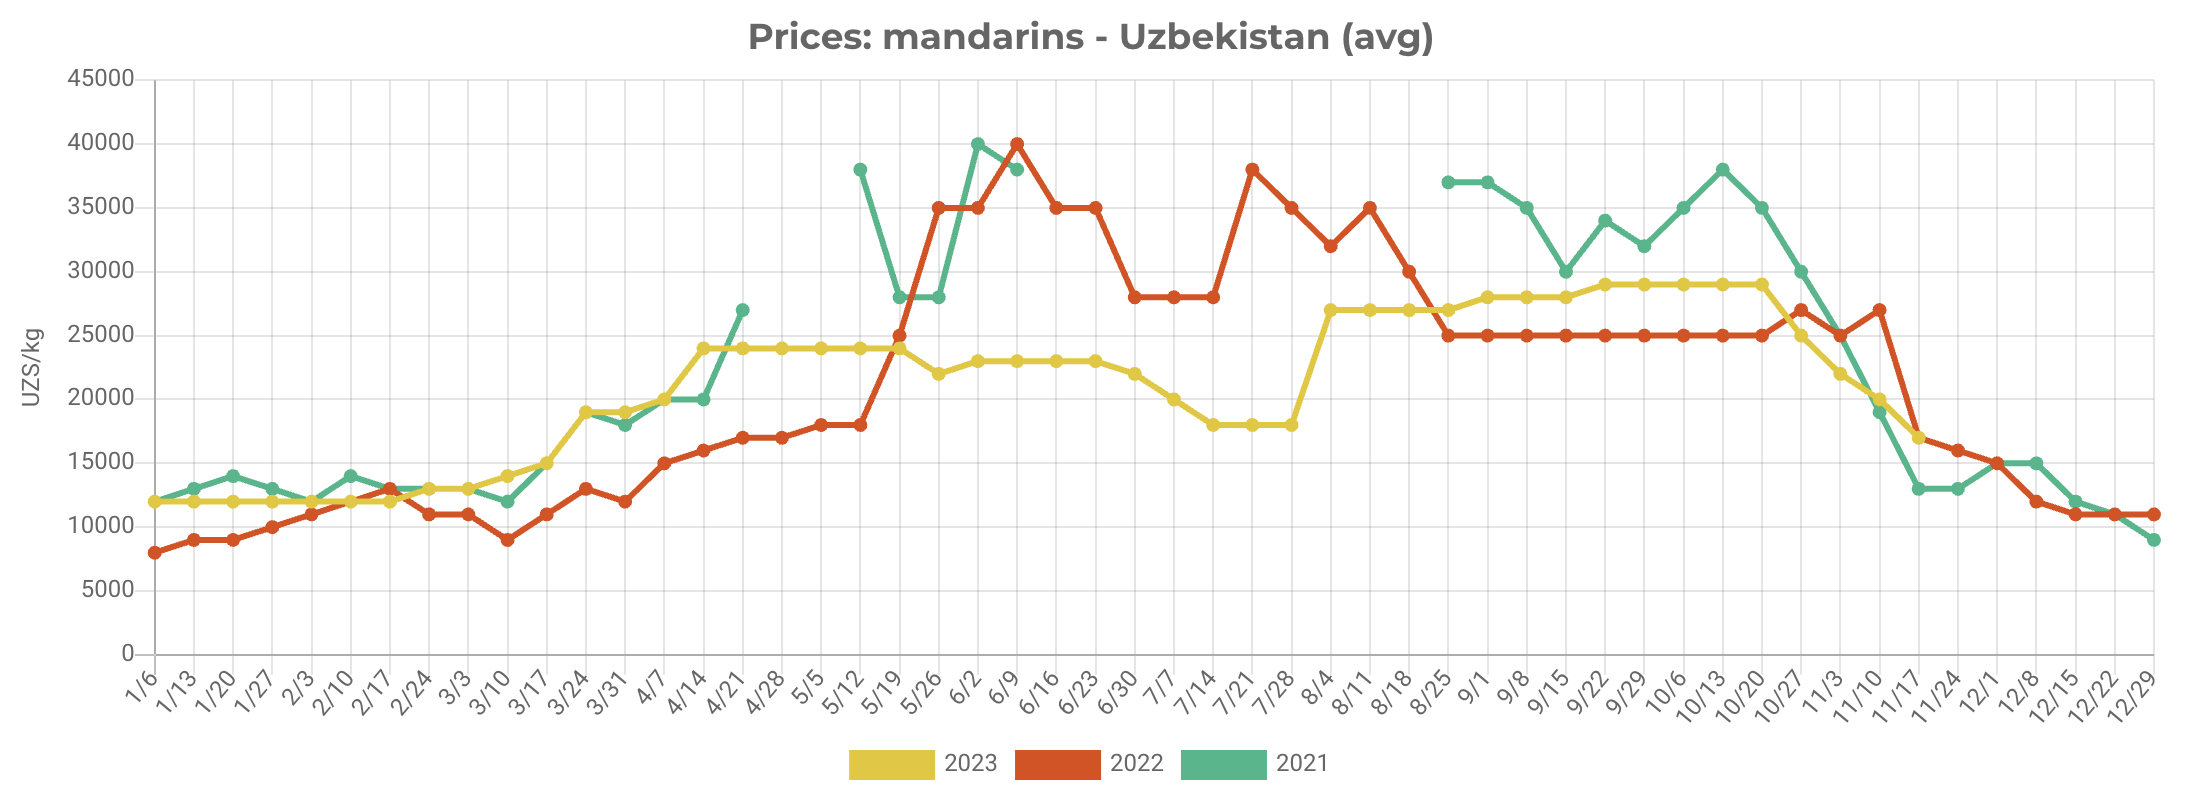 Mandarin Prices in Uzbekistan drop